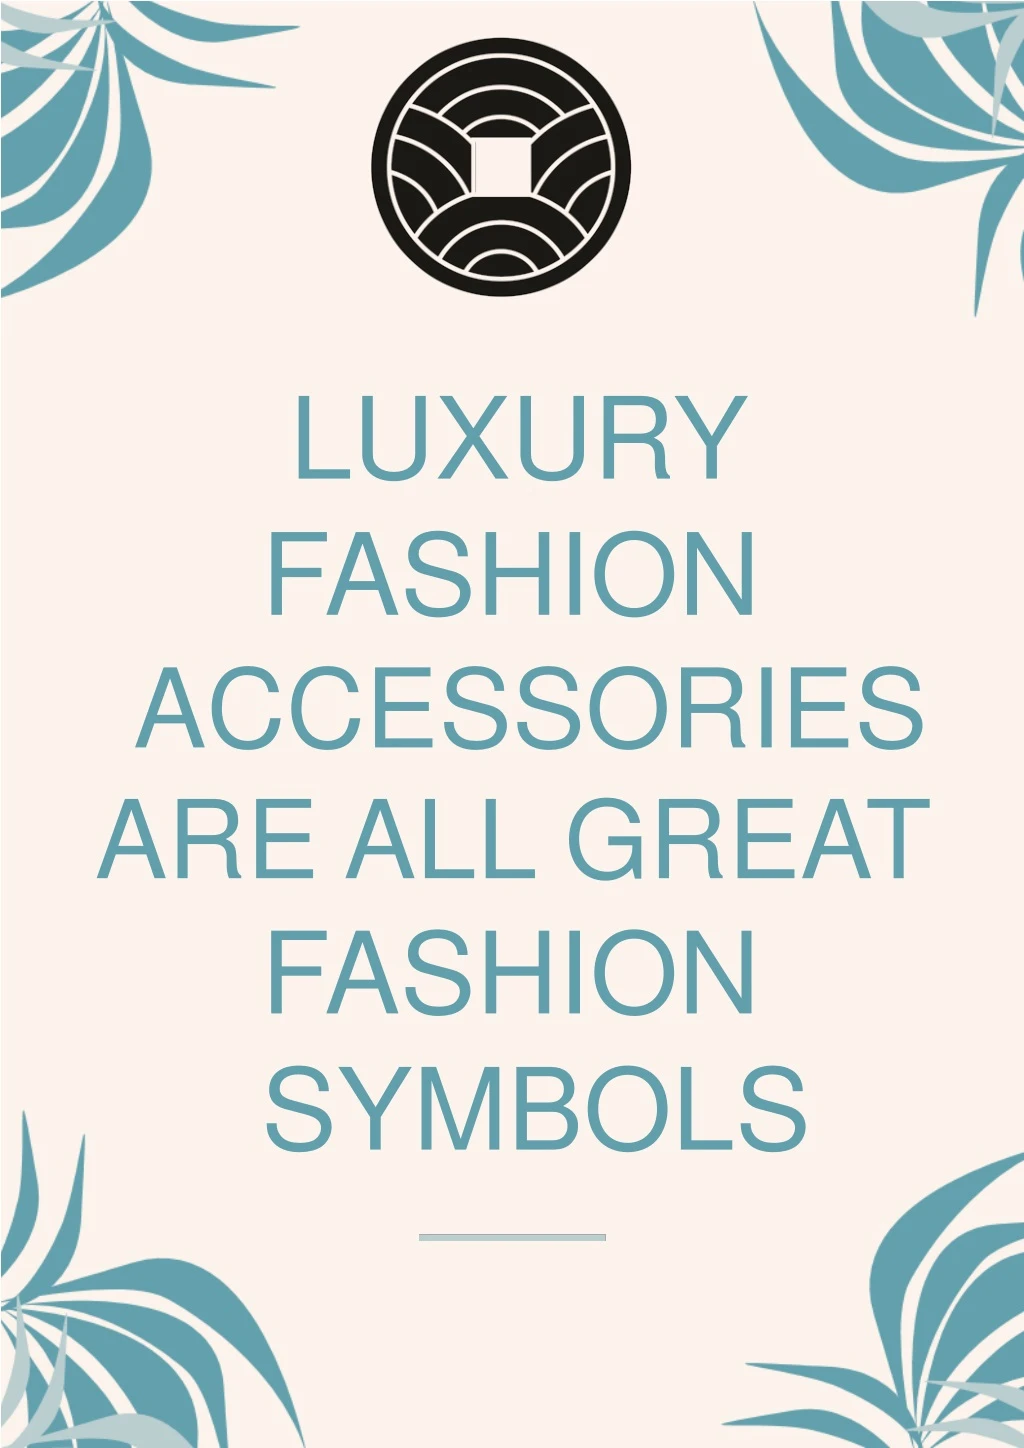 luxury fashion accessories are all great fashion